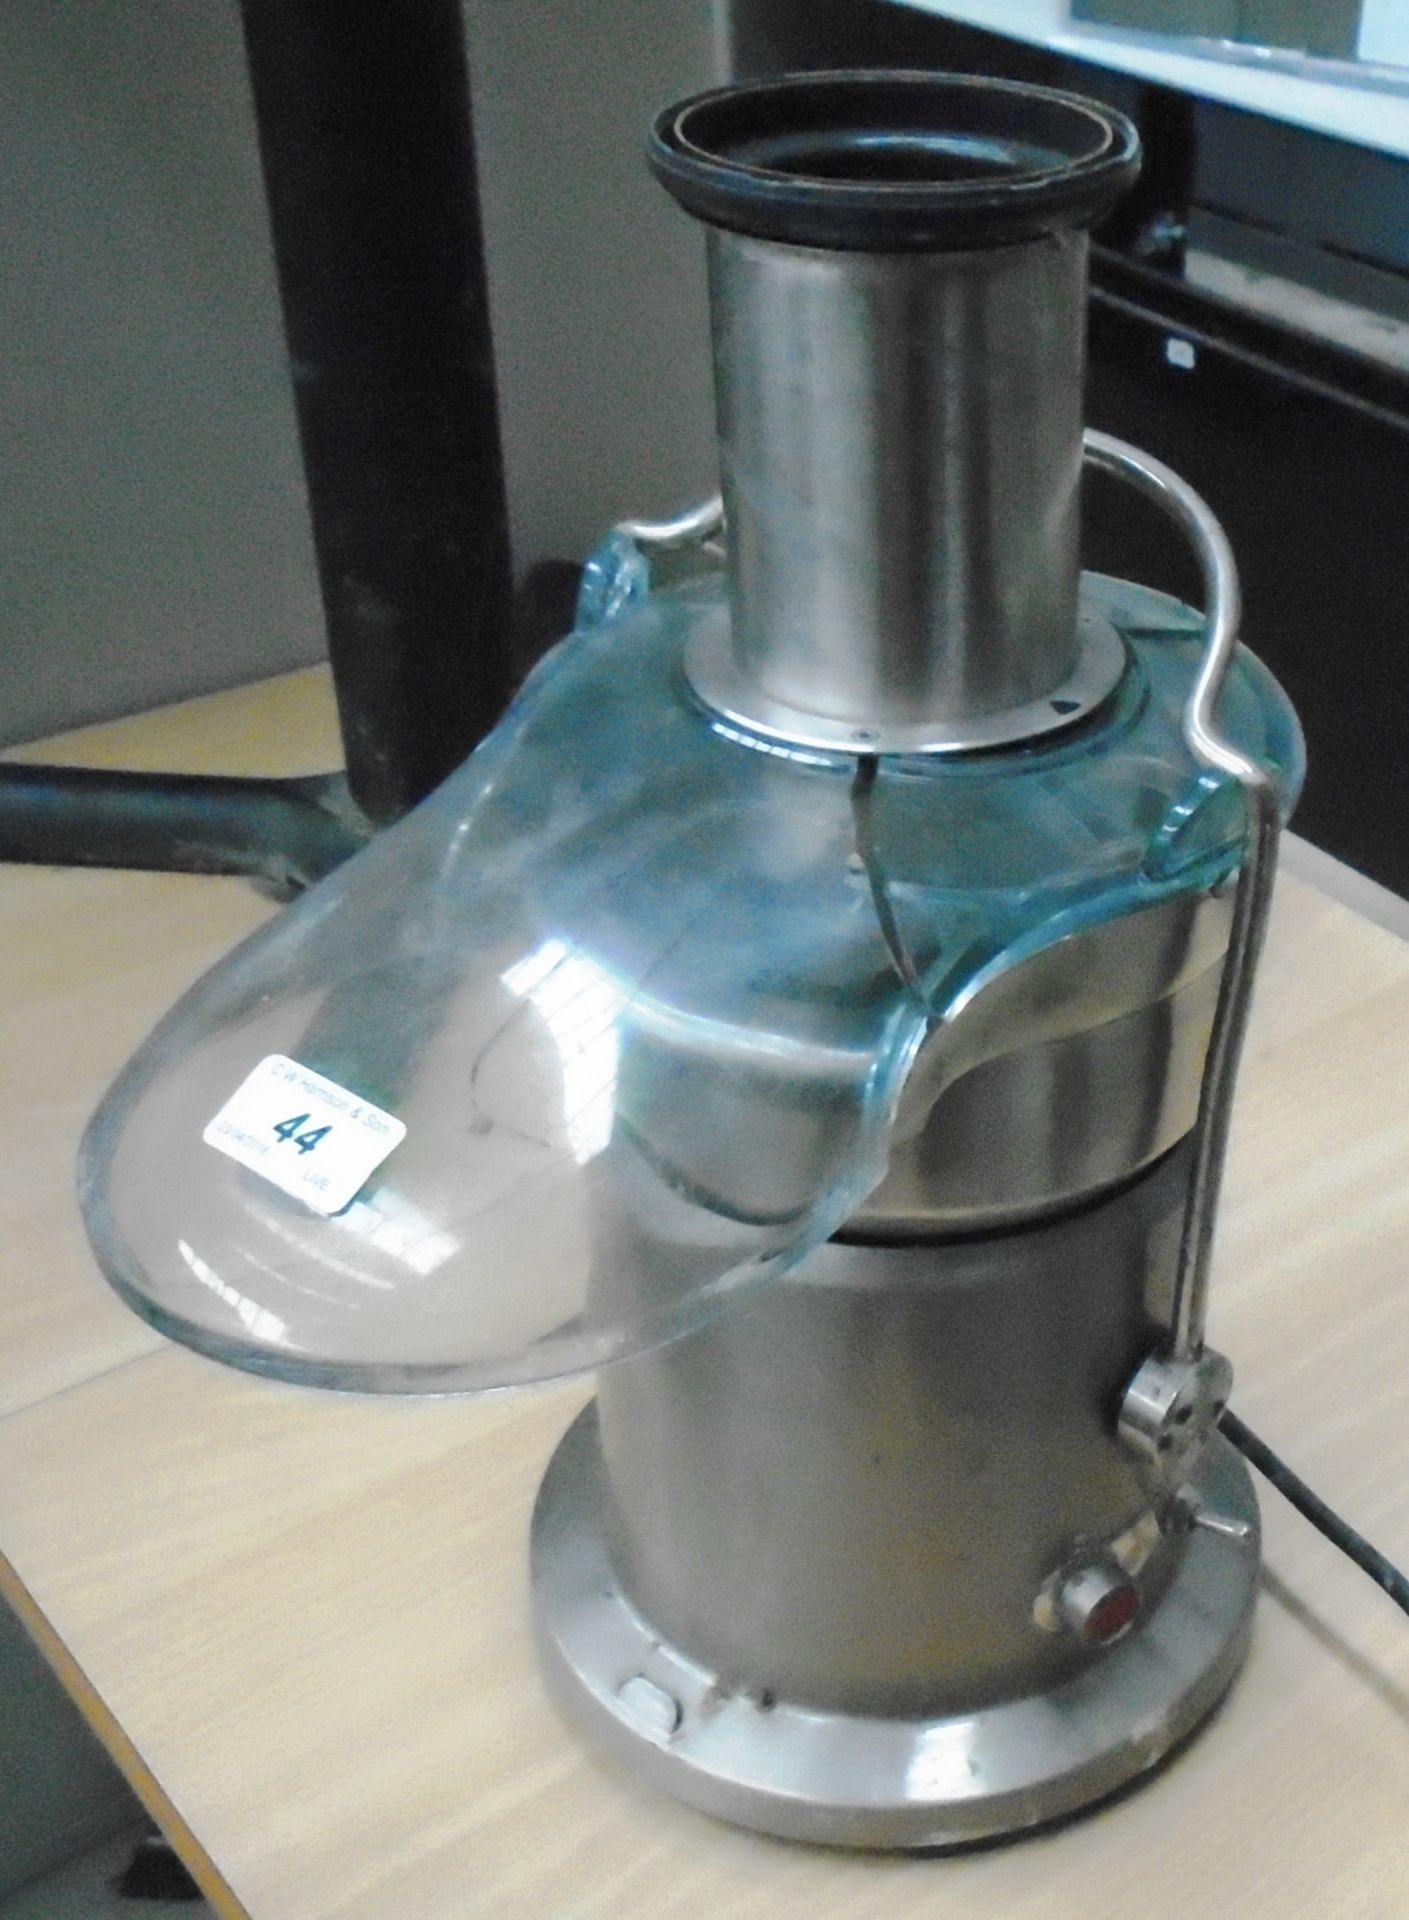 A Cruz Solis commercial juicer Pro machine (failed safety test)